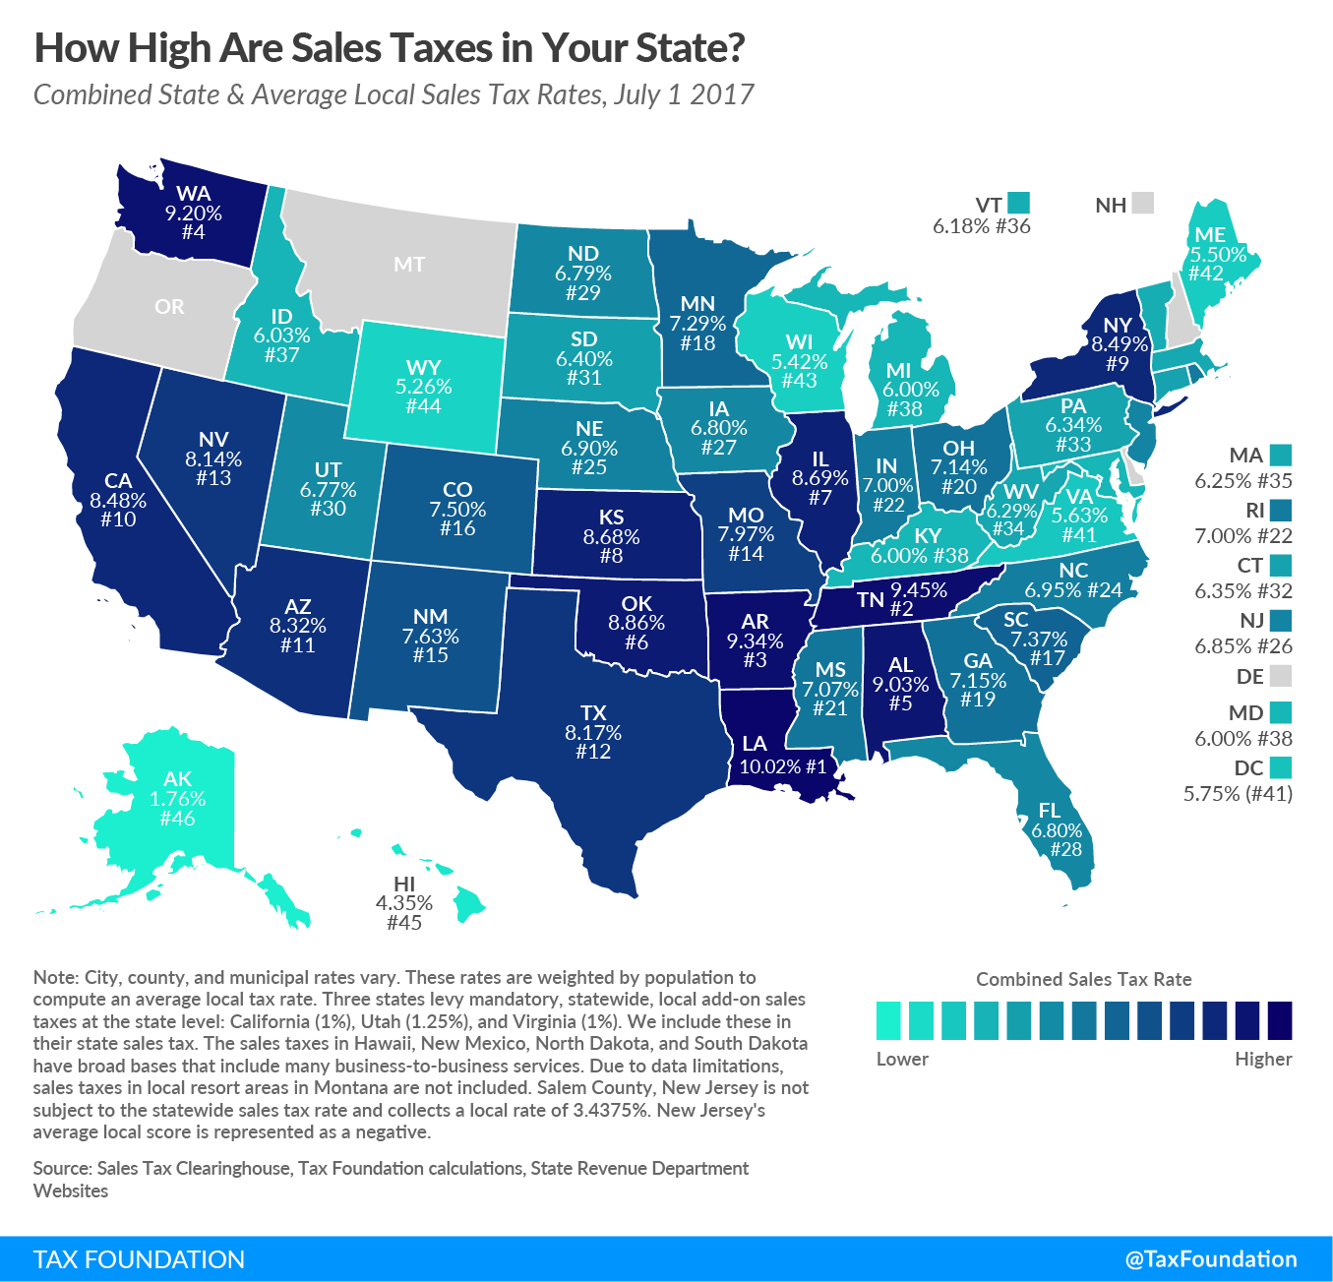 Louisiana sales tax rate remains highest in the U.S. Legislature